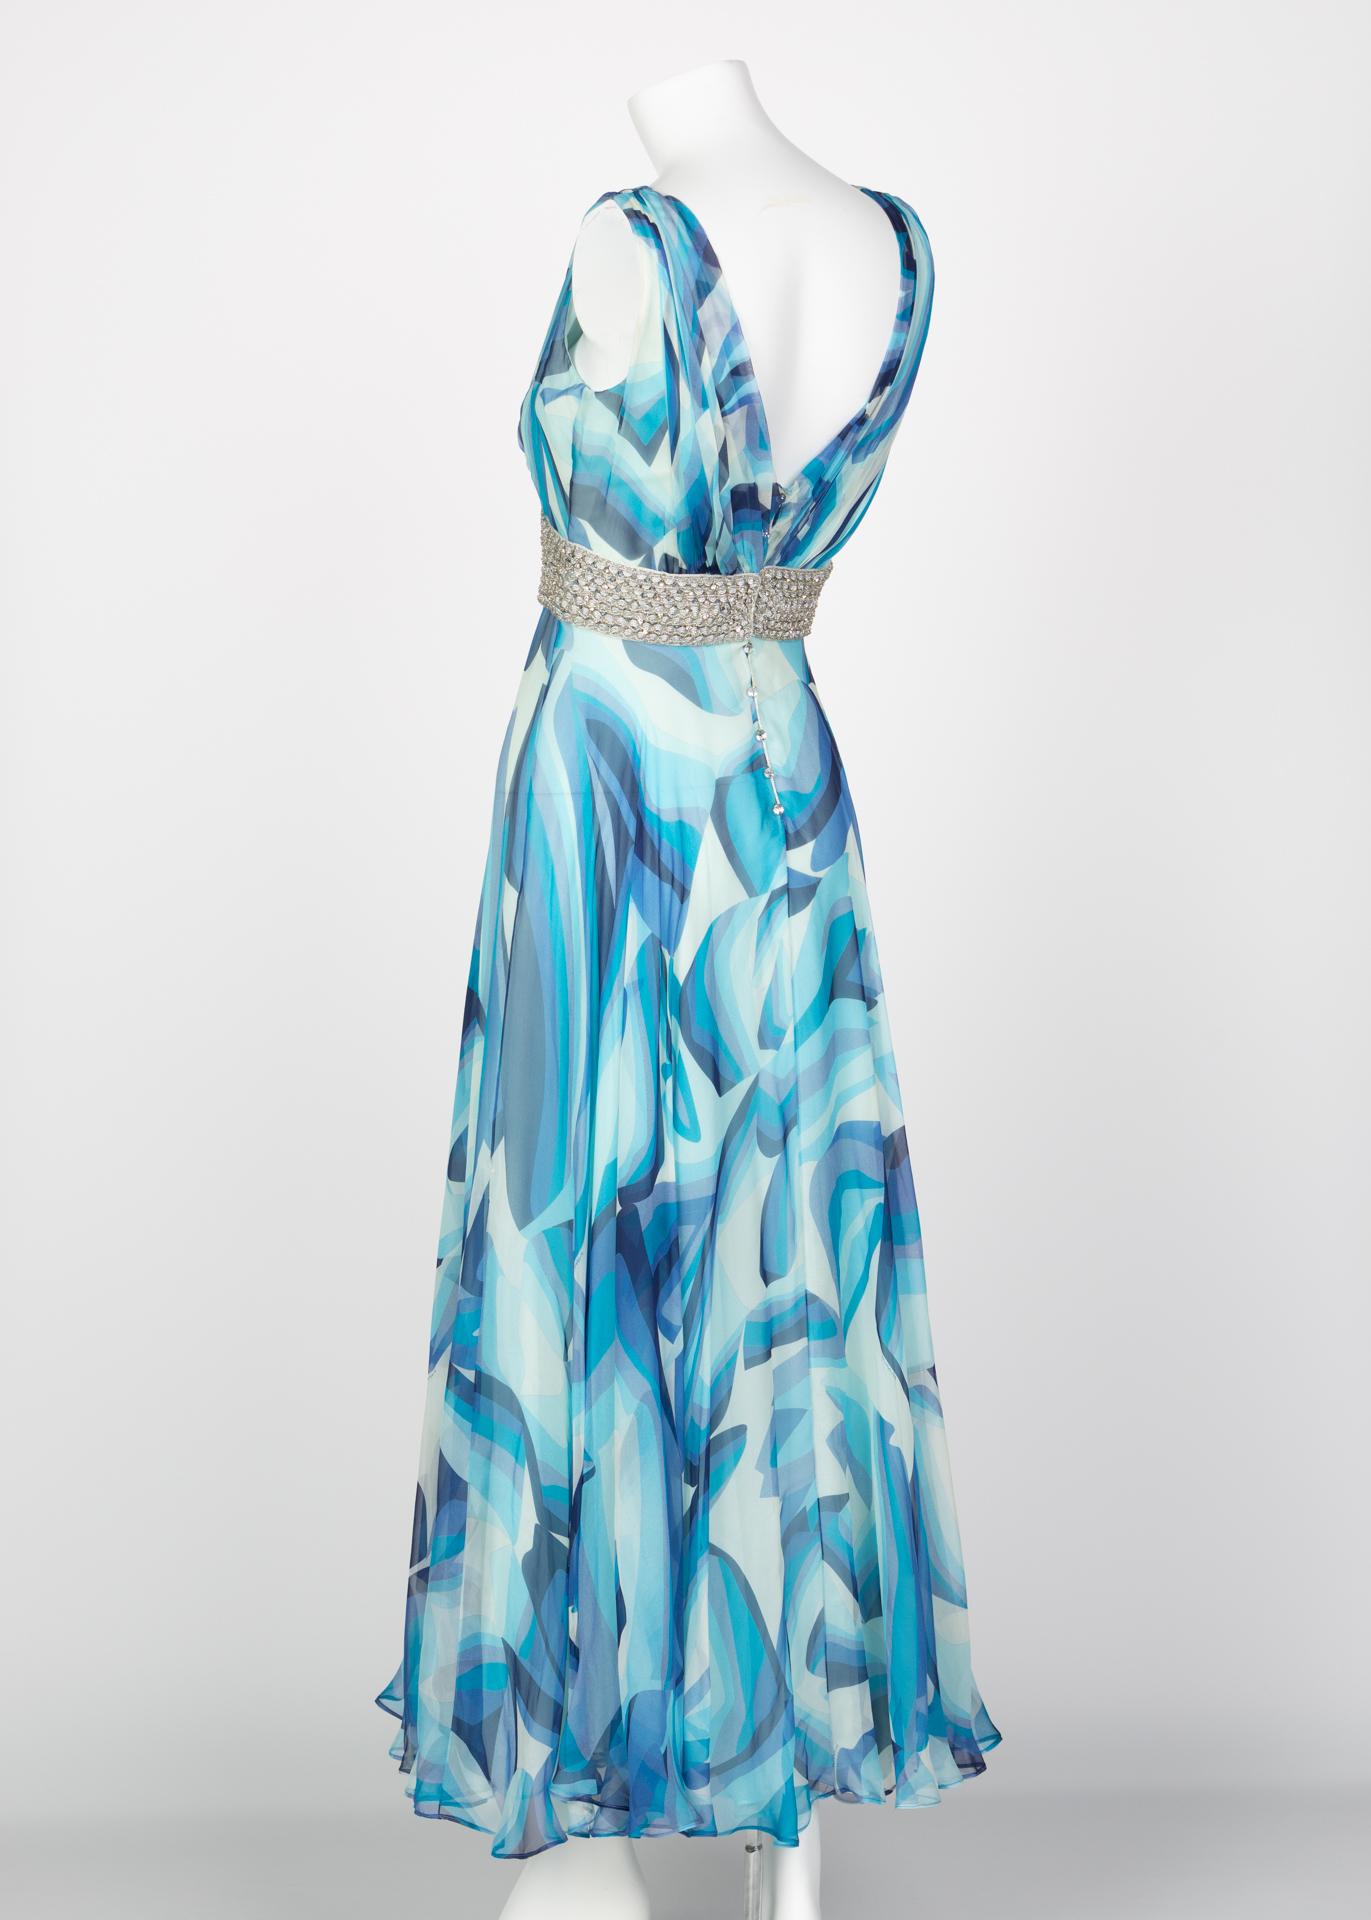 Women's Missoni Blue Printed Plunge Neck Sleeveless Silk Crystal Gown, 2006